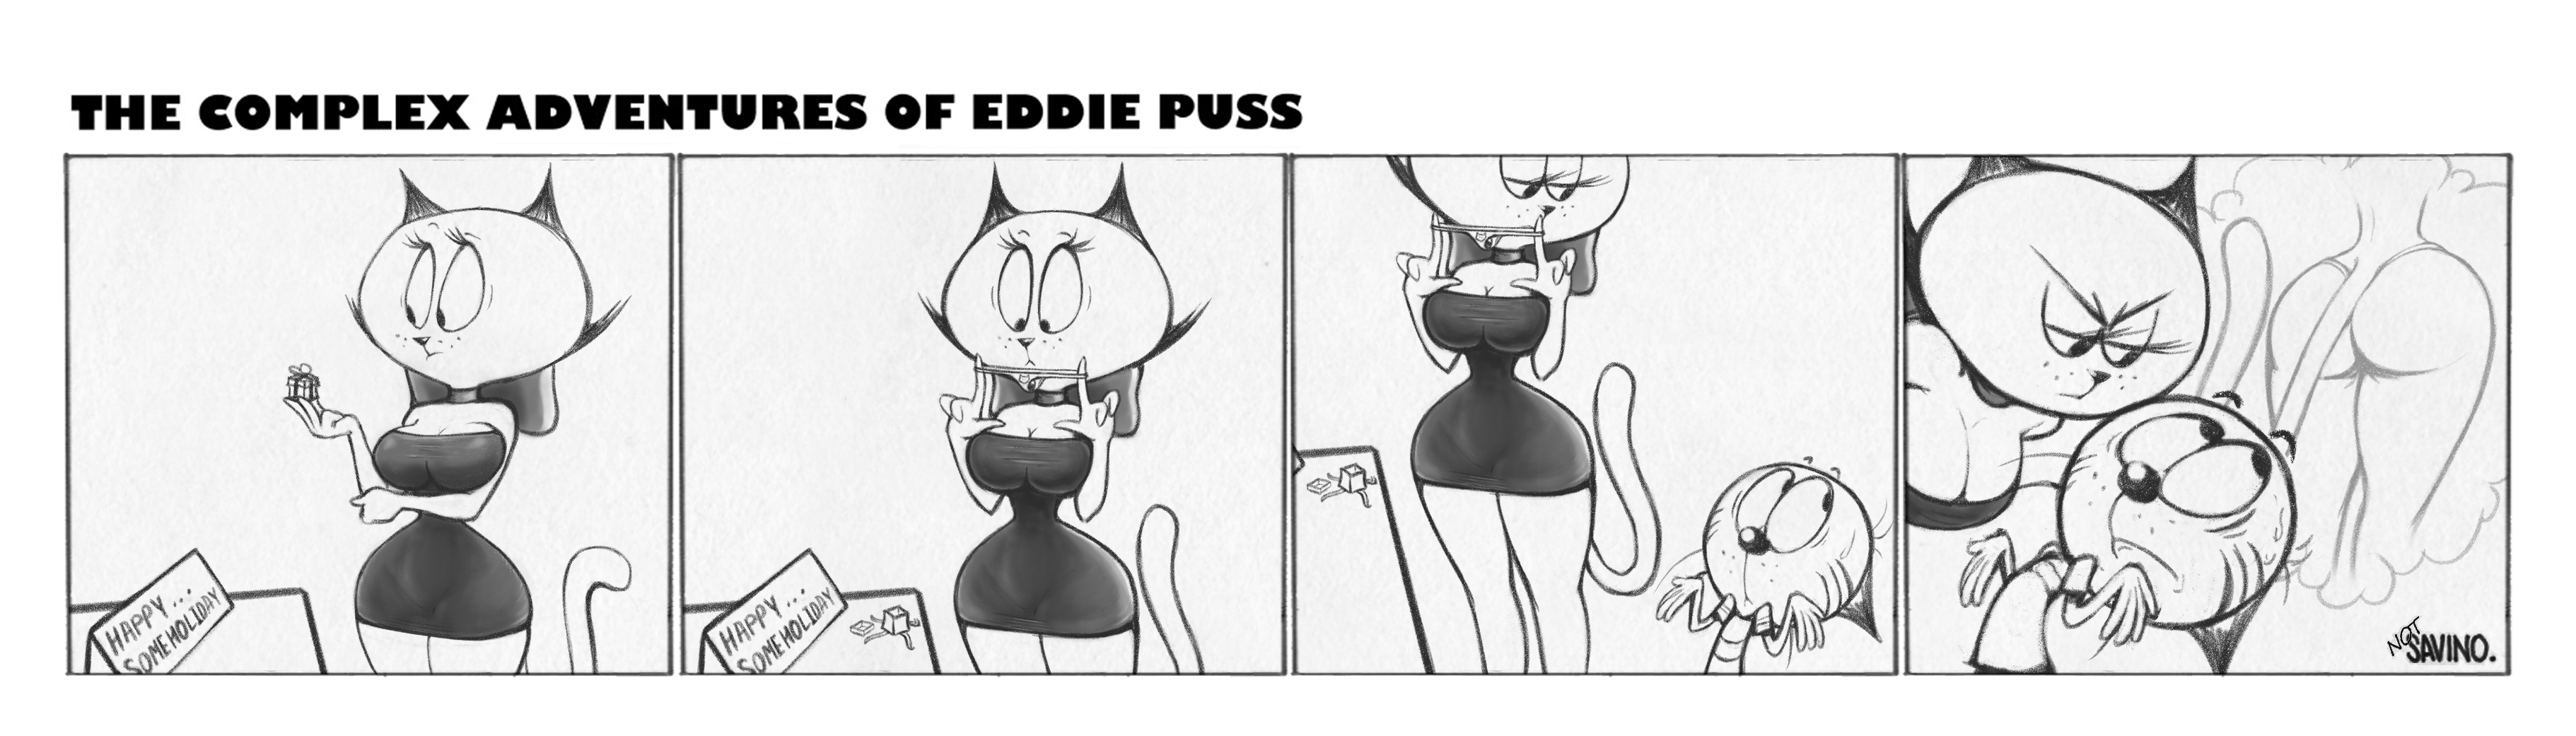 The complex adventures of eddie puss